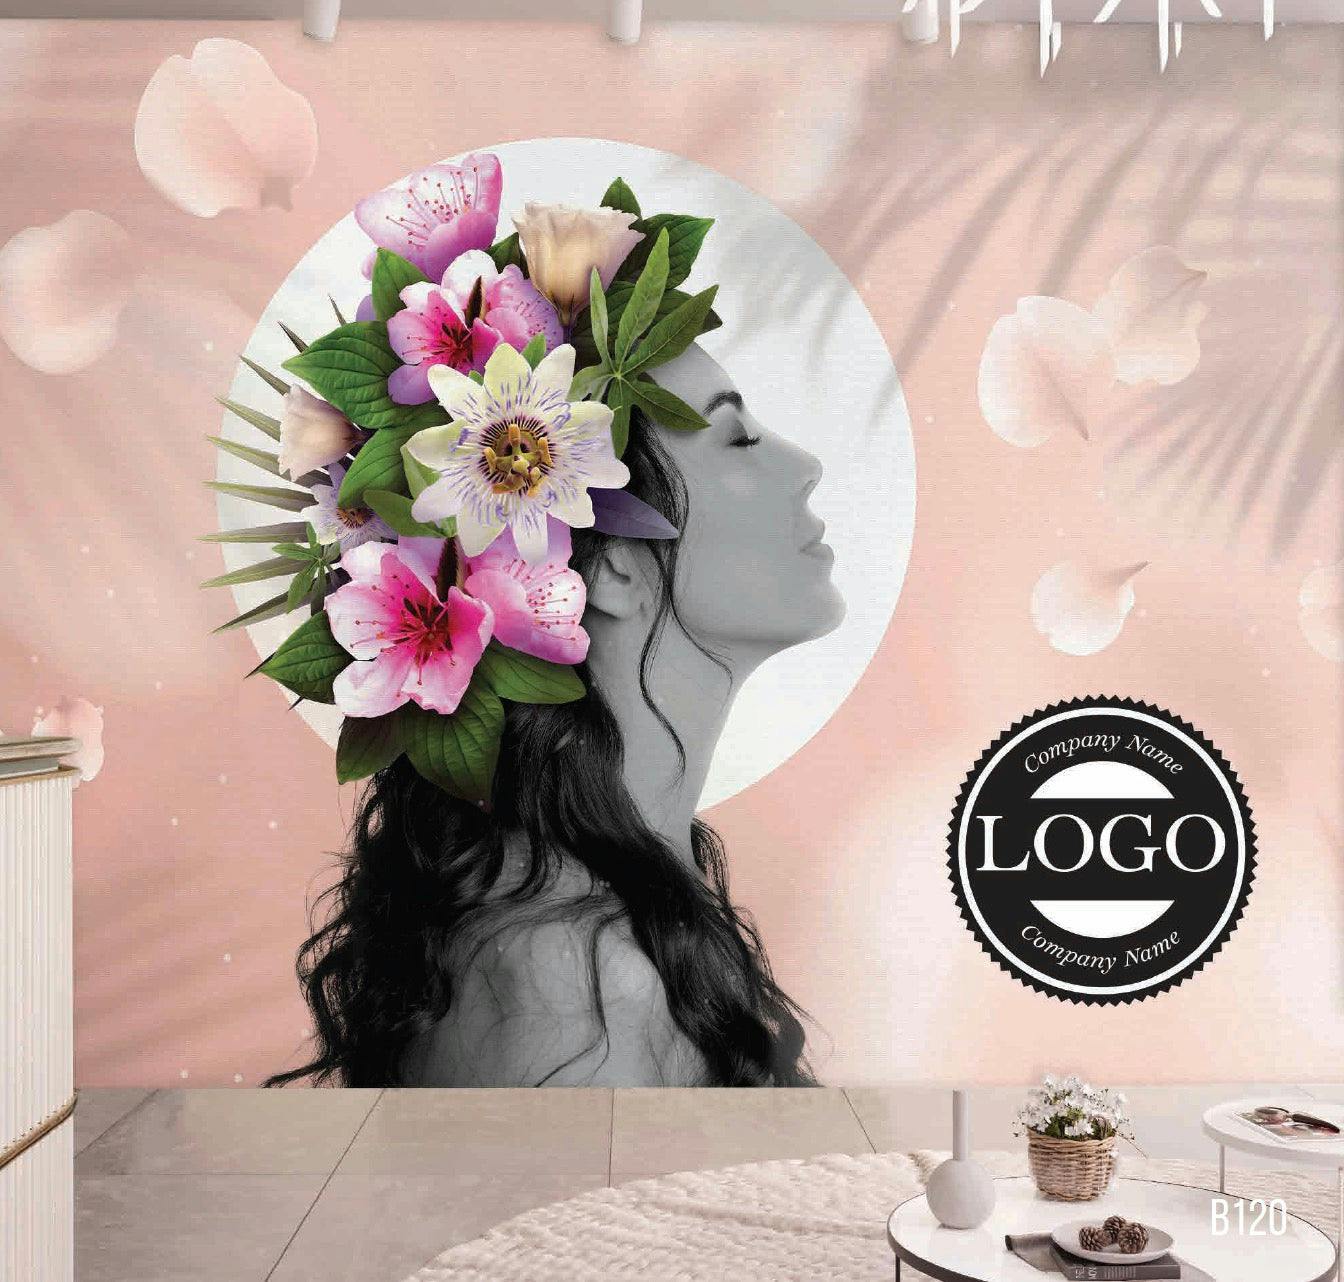 Enchanting Lady with Vibrant Flower Headdress - Premium Fiber Canvas Mural